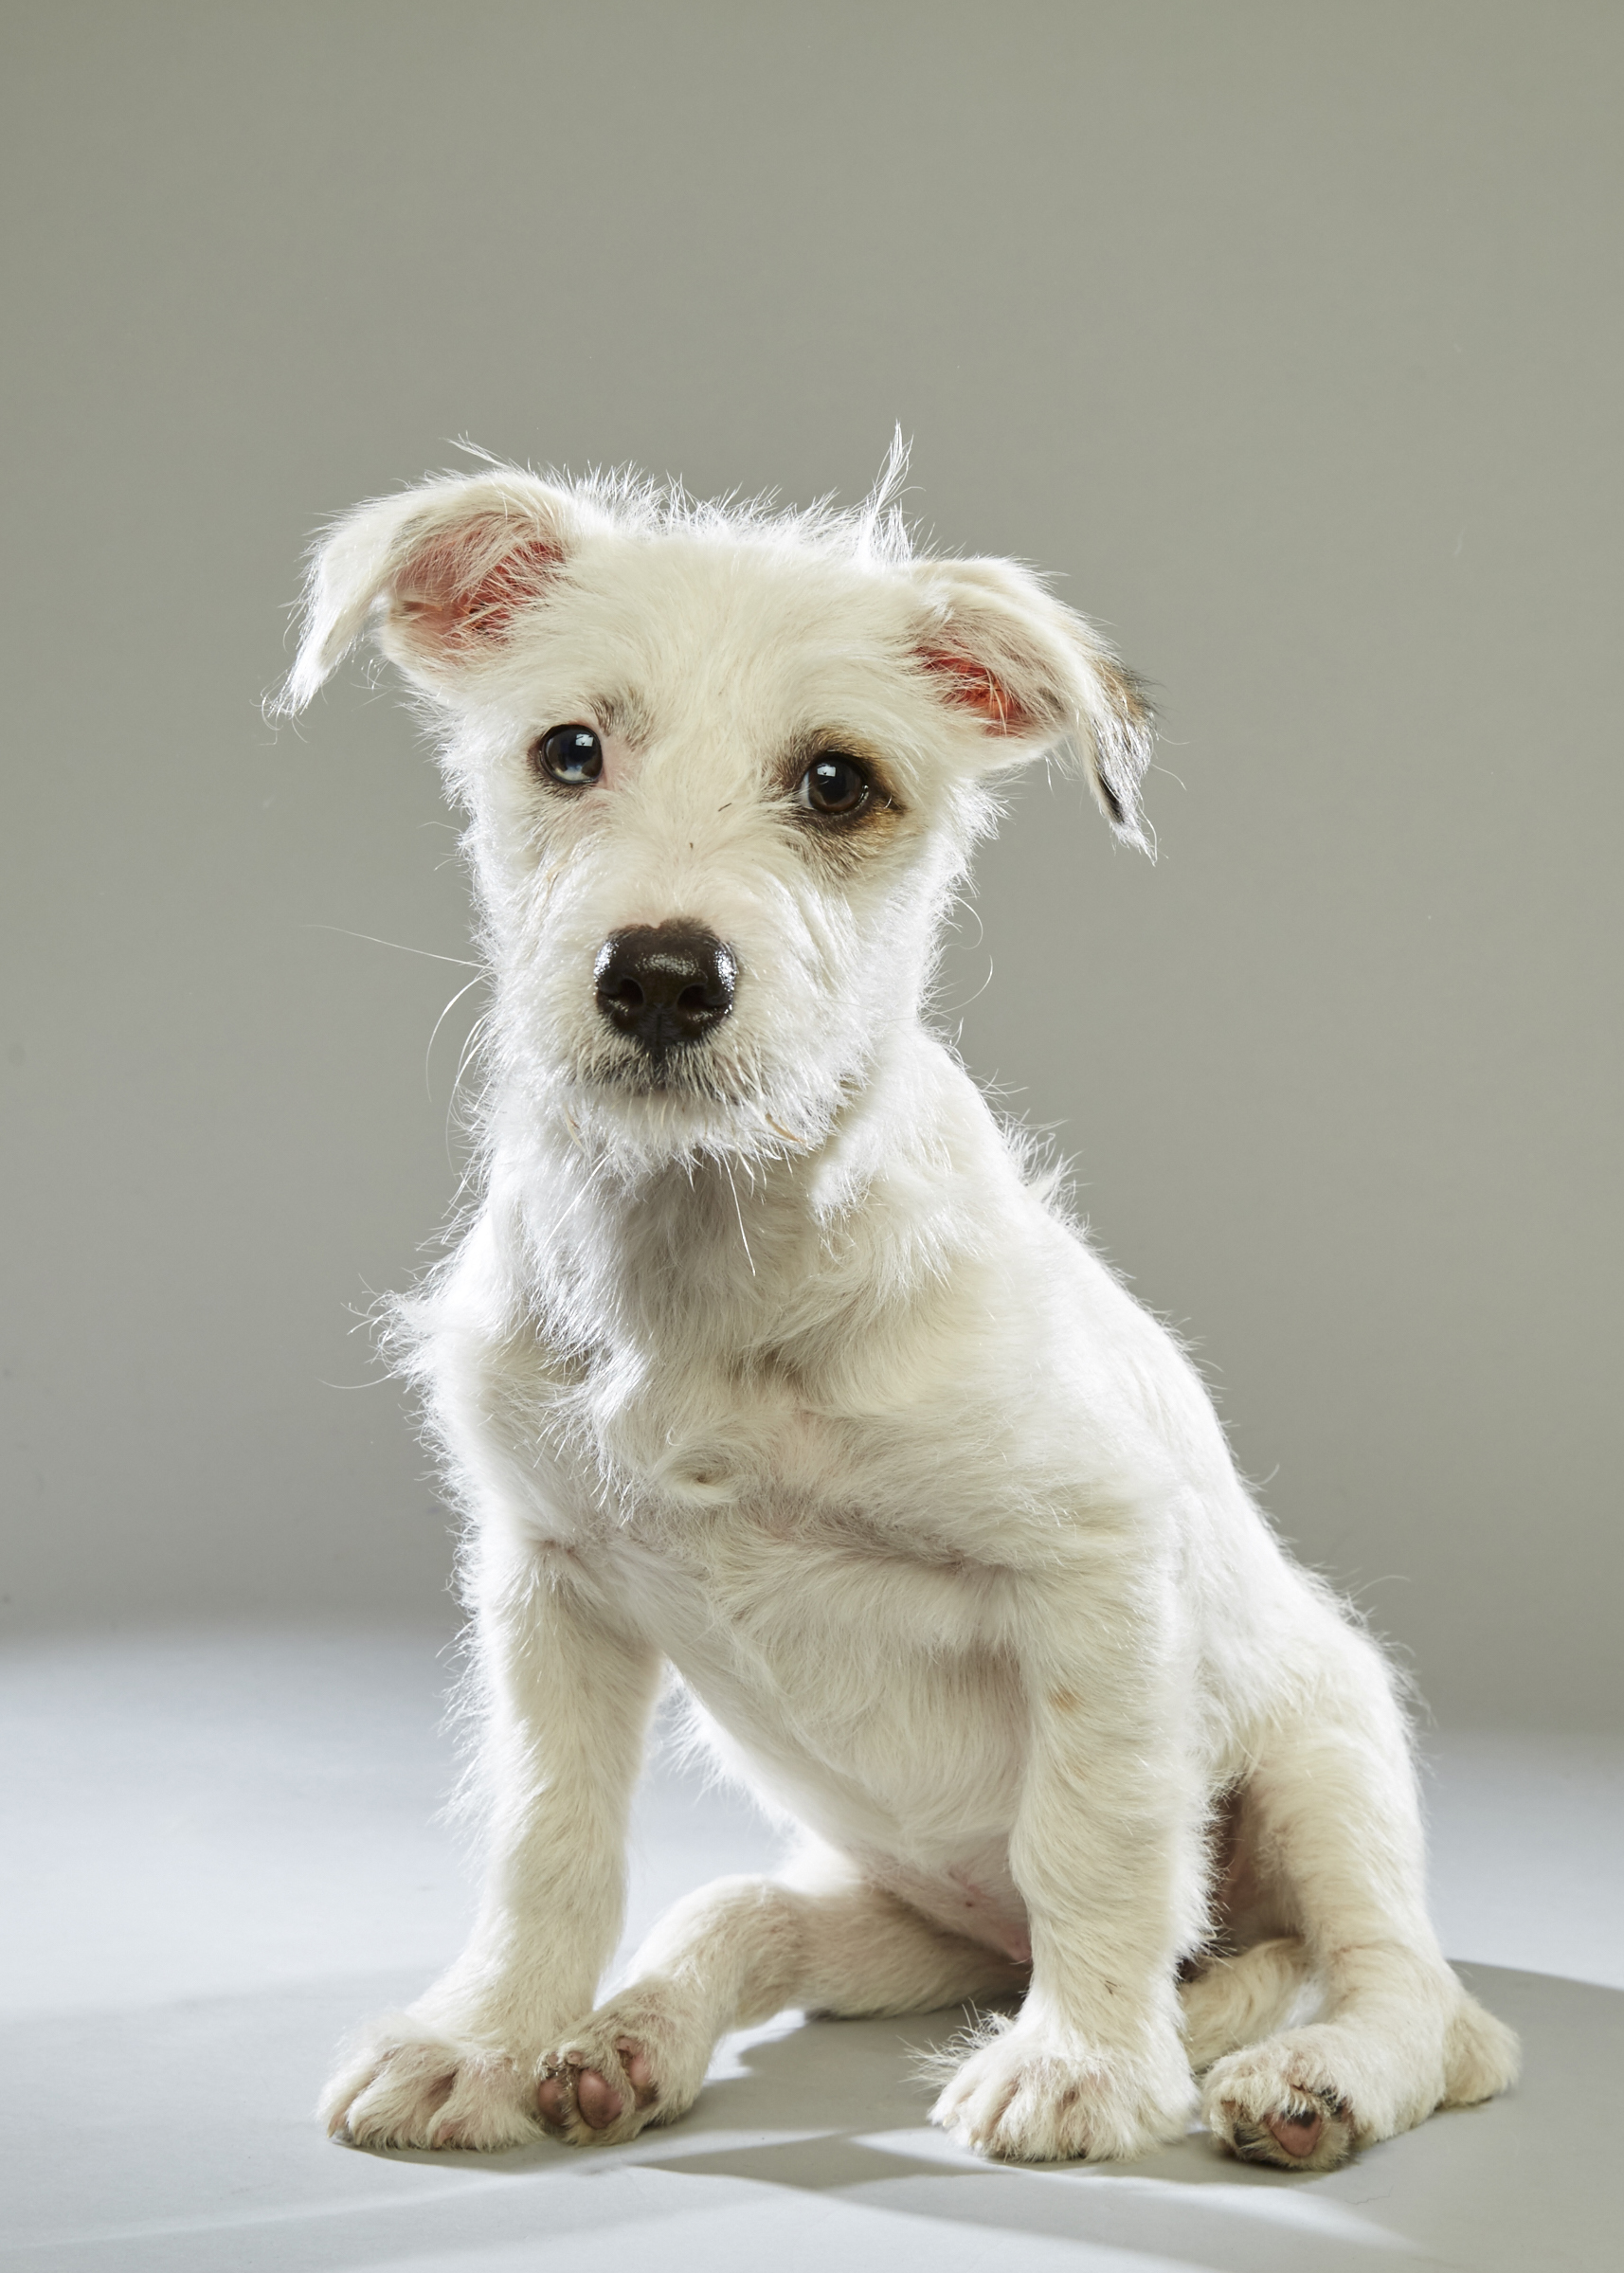 Hailey - Austin Pets Alive! Puppy Bowl